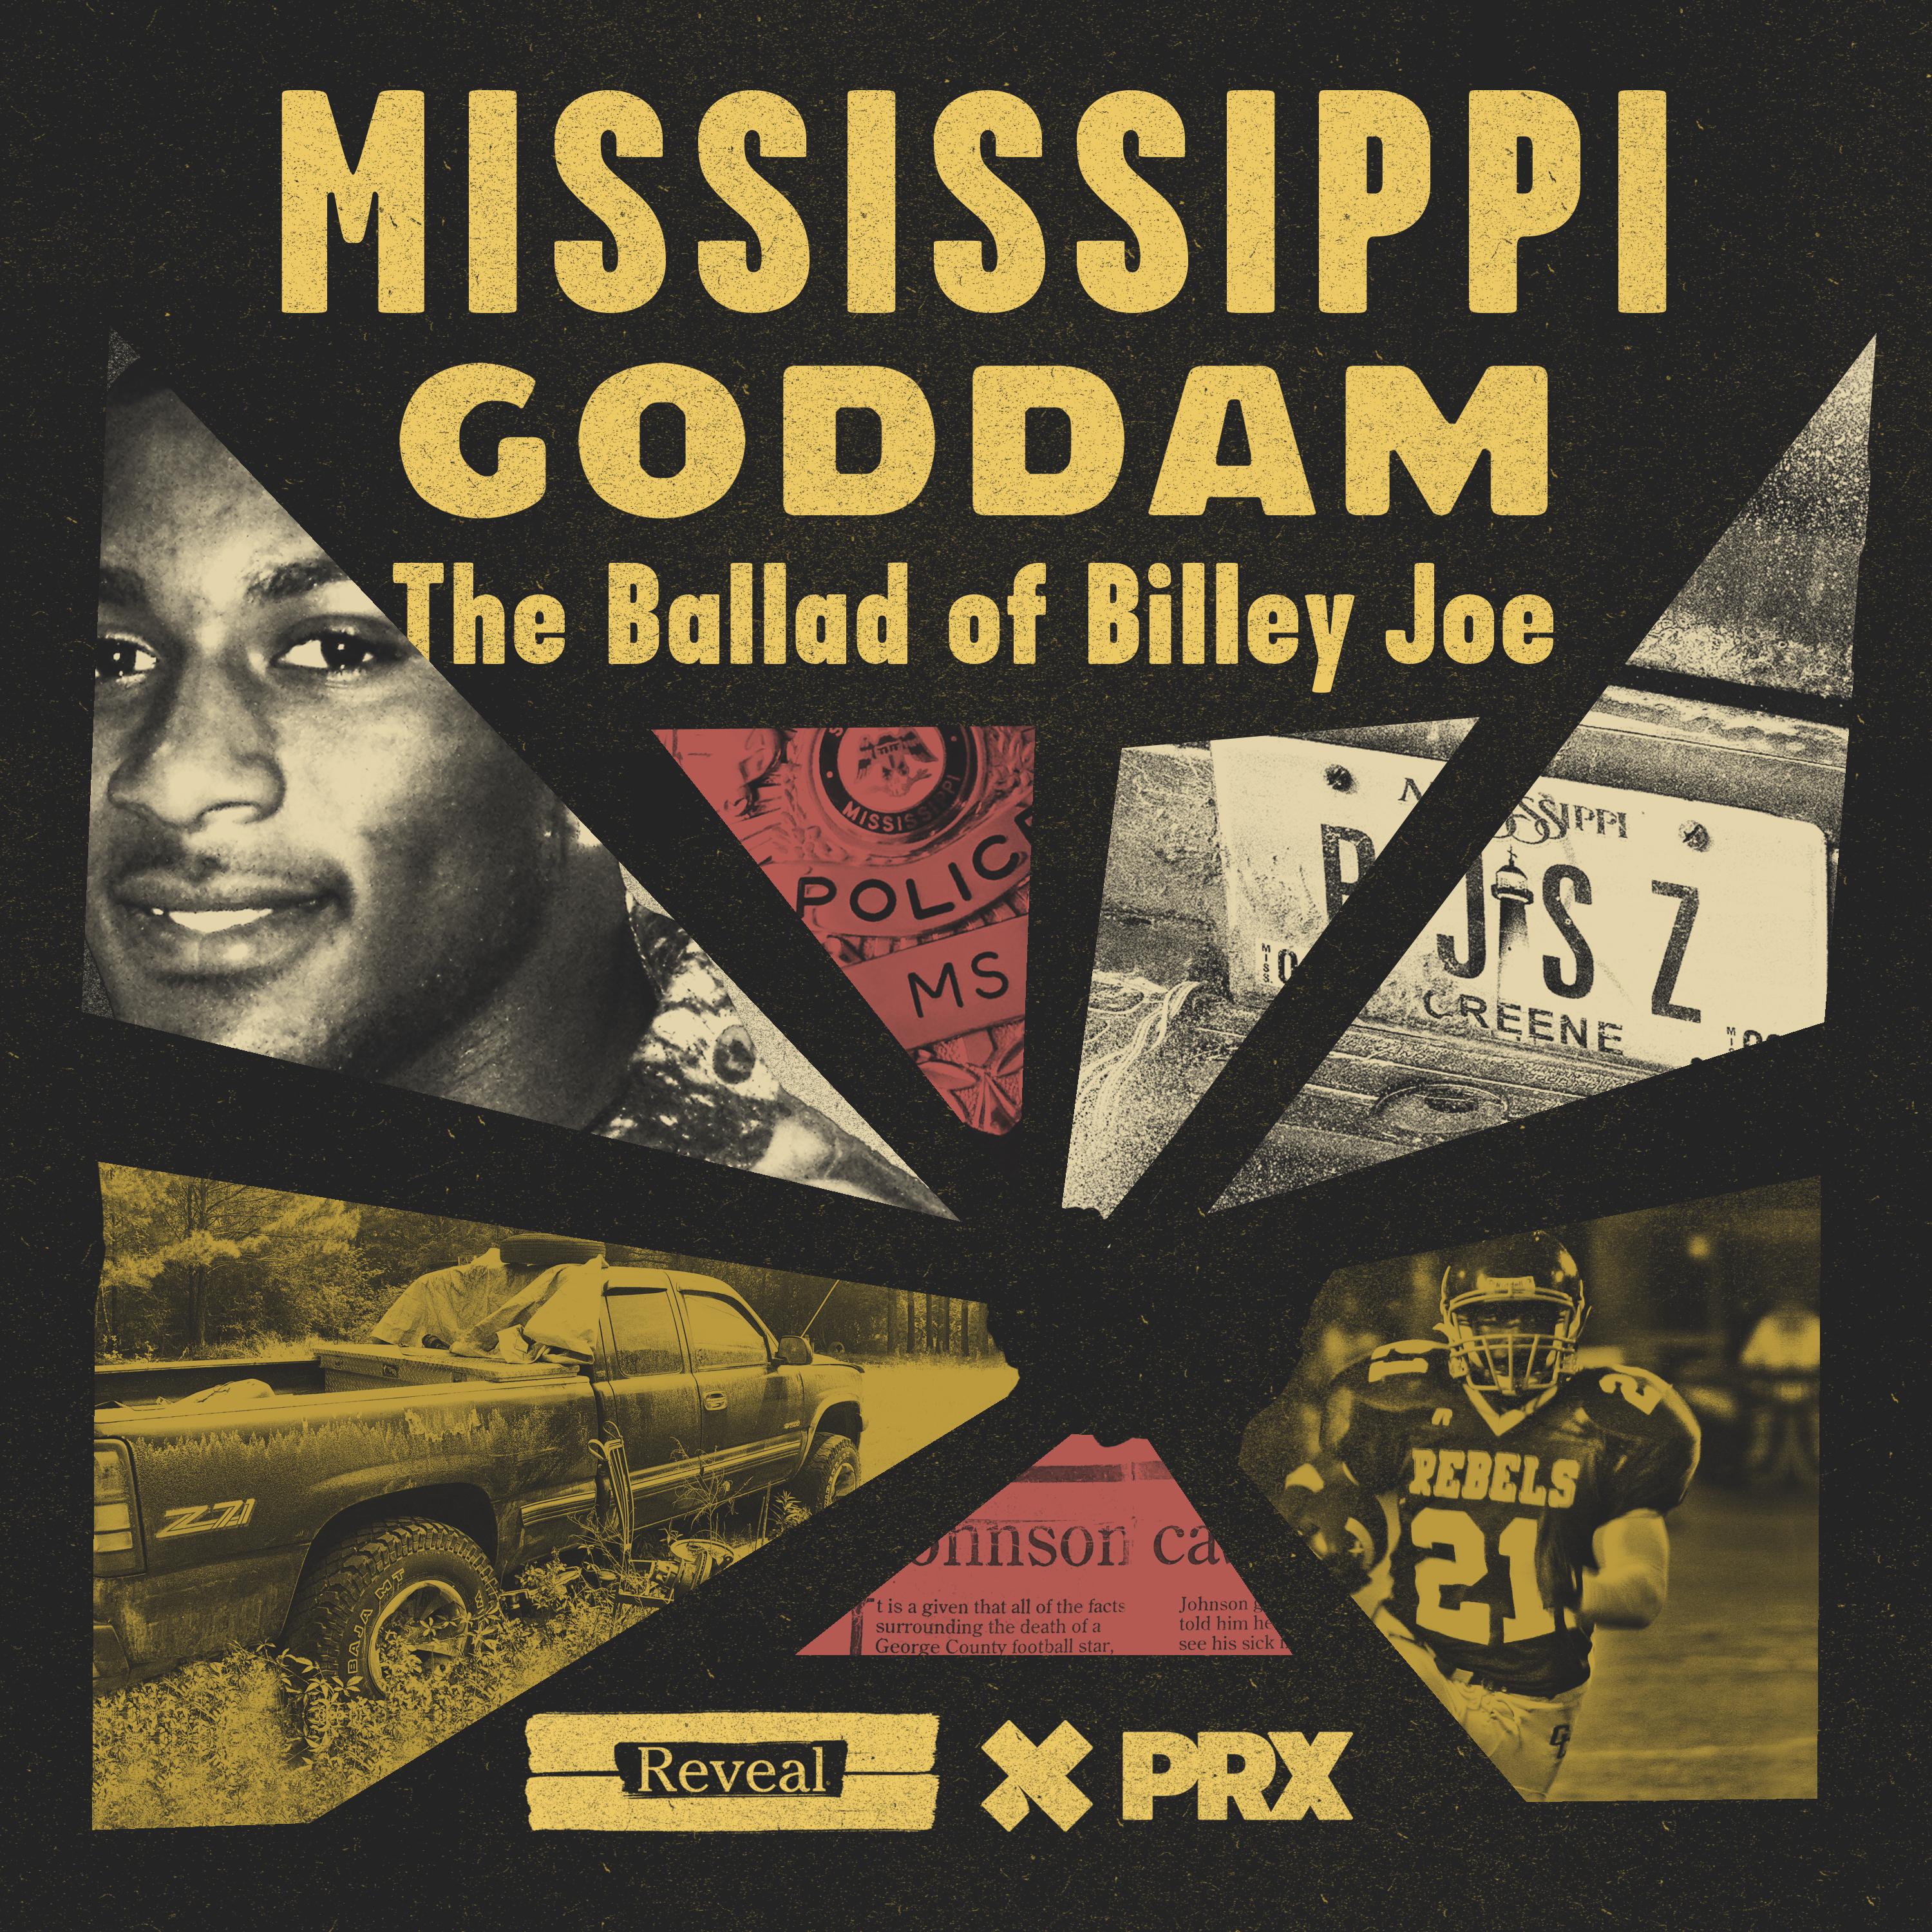 Thumbnail for "Mississippi Goddam Chapter 1: The Promise".